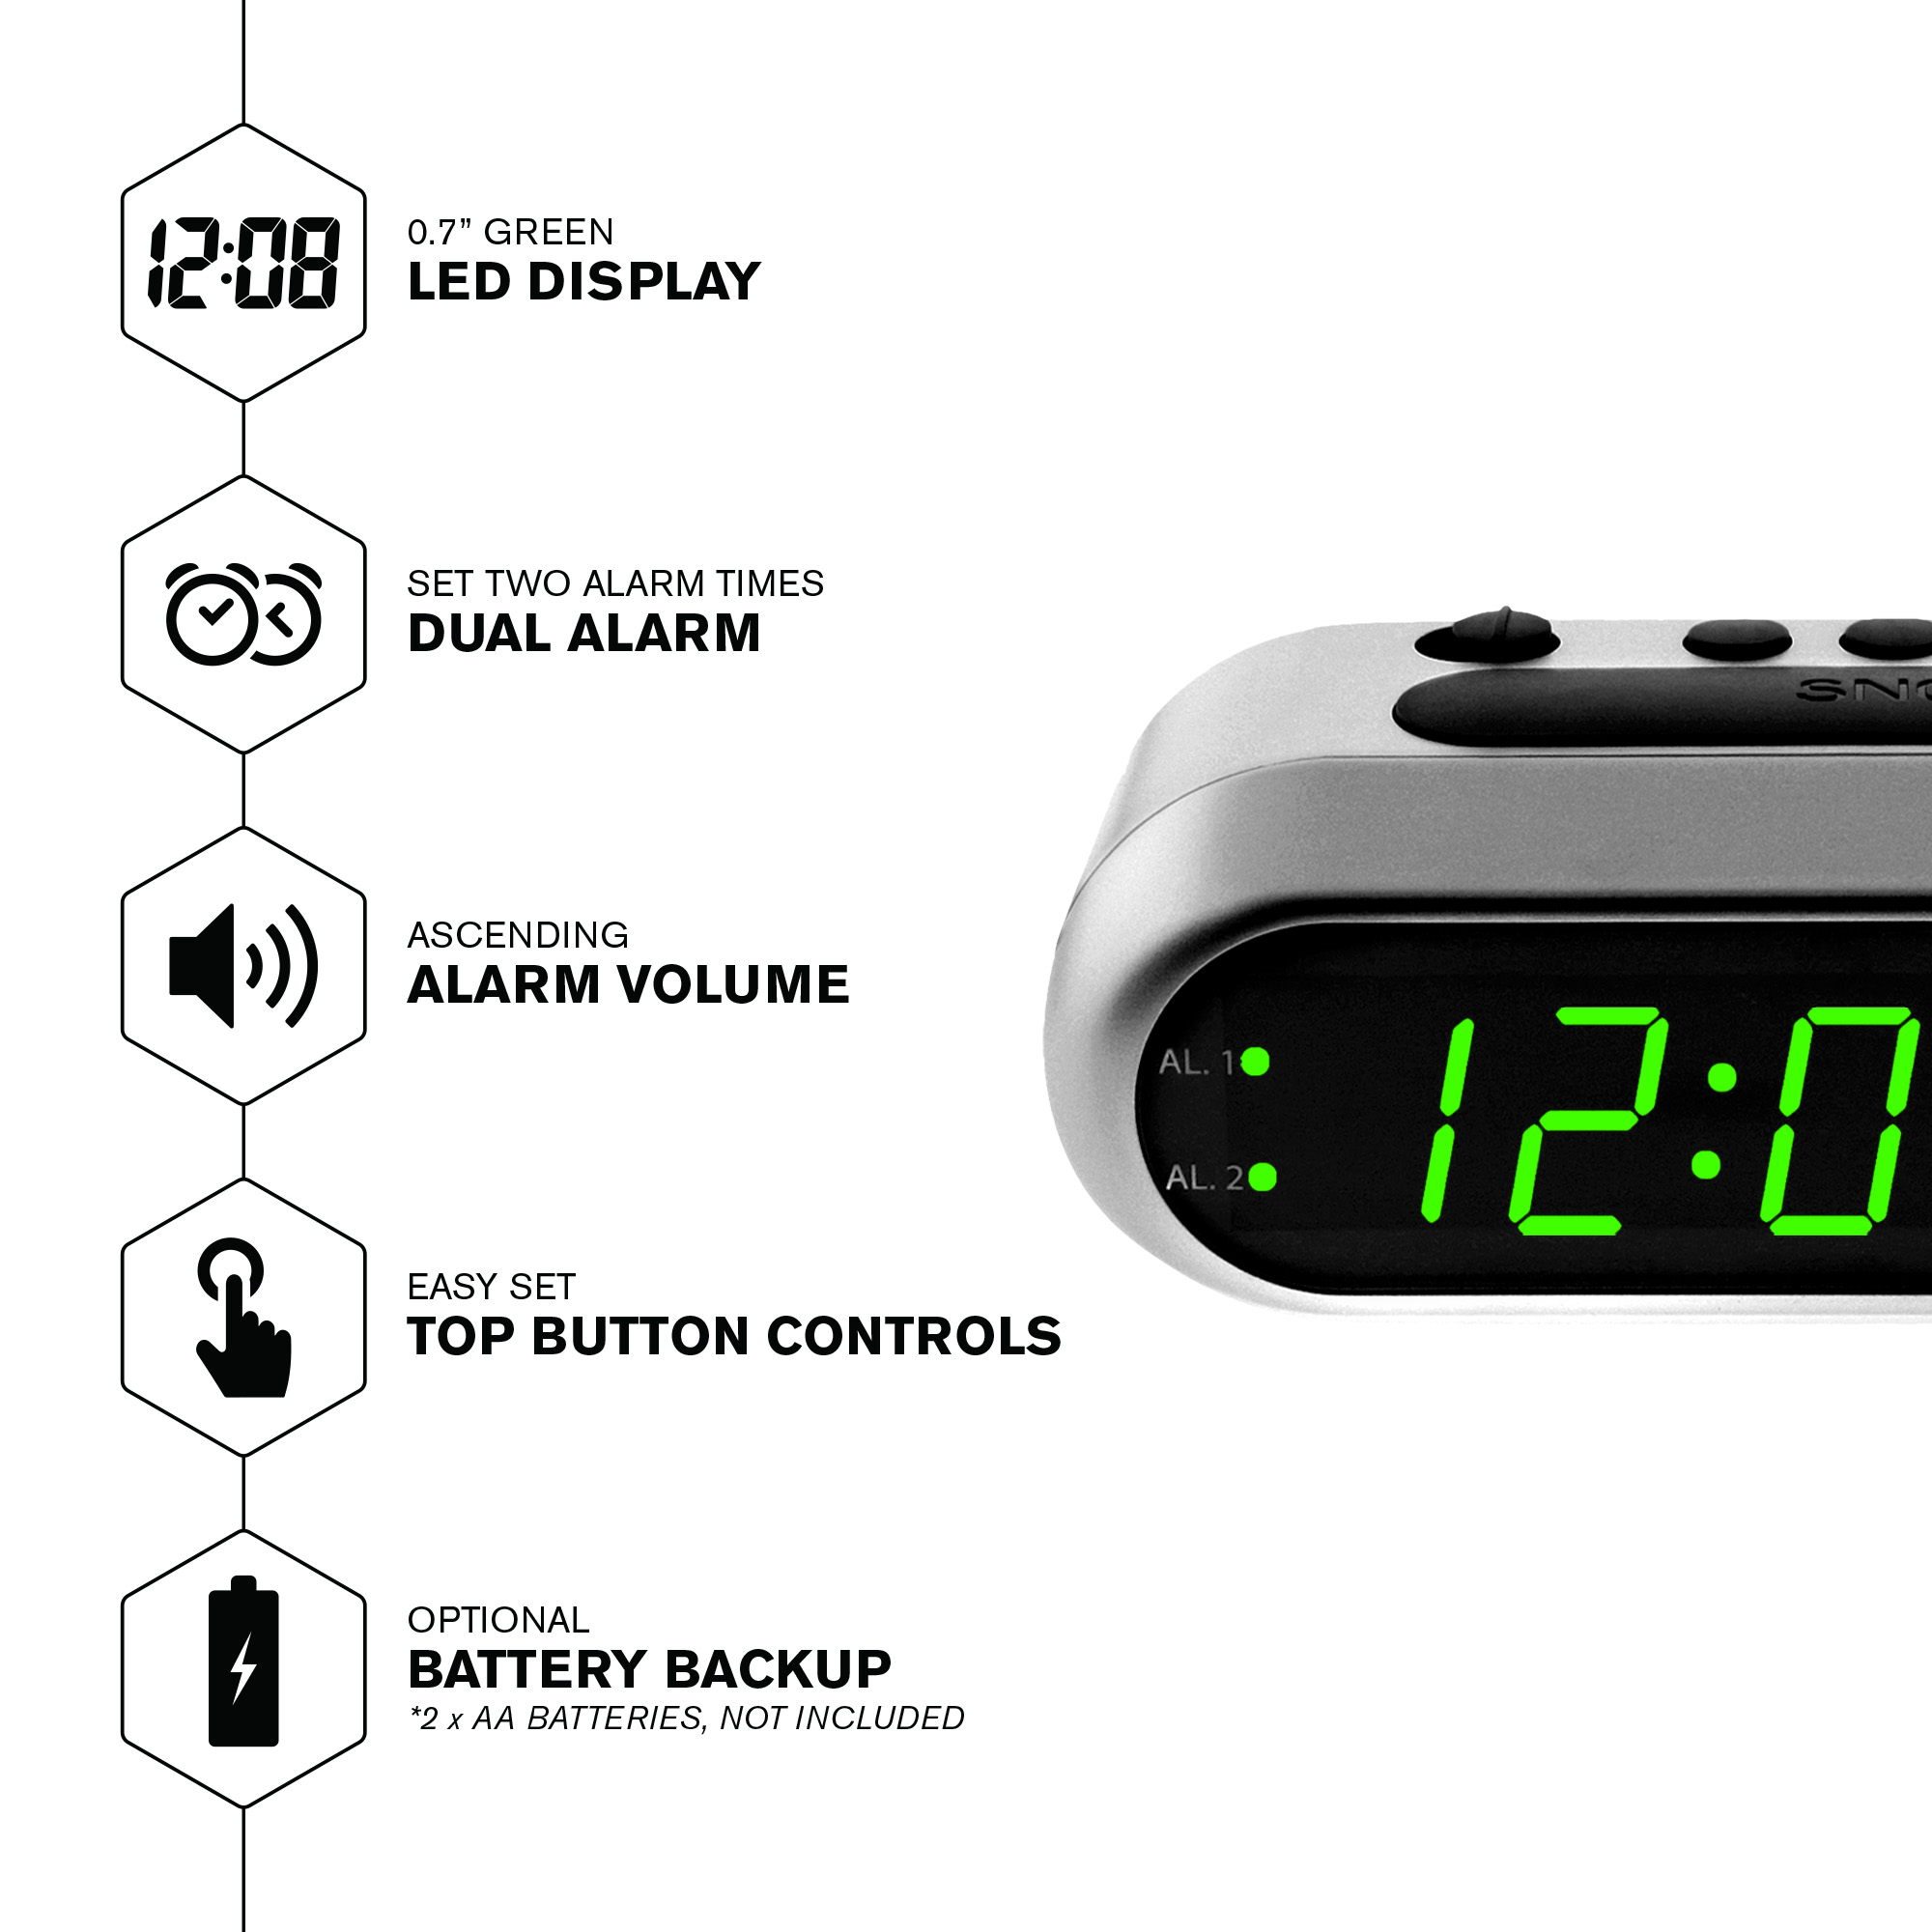 SHARP Digital Dual Alarm Clock, Silver with Green LED Display, Ascending Alarm - image 2 of 6